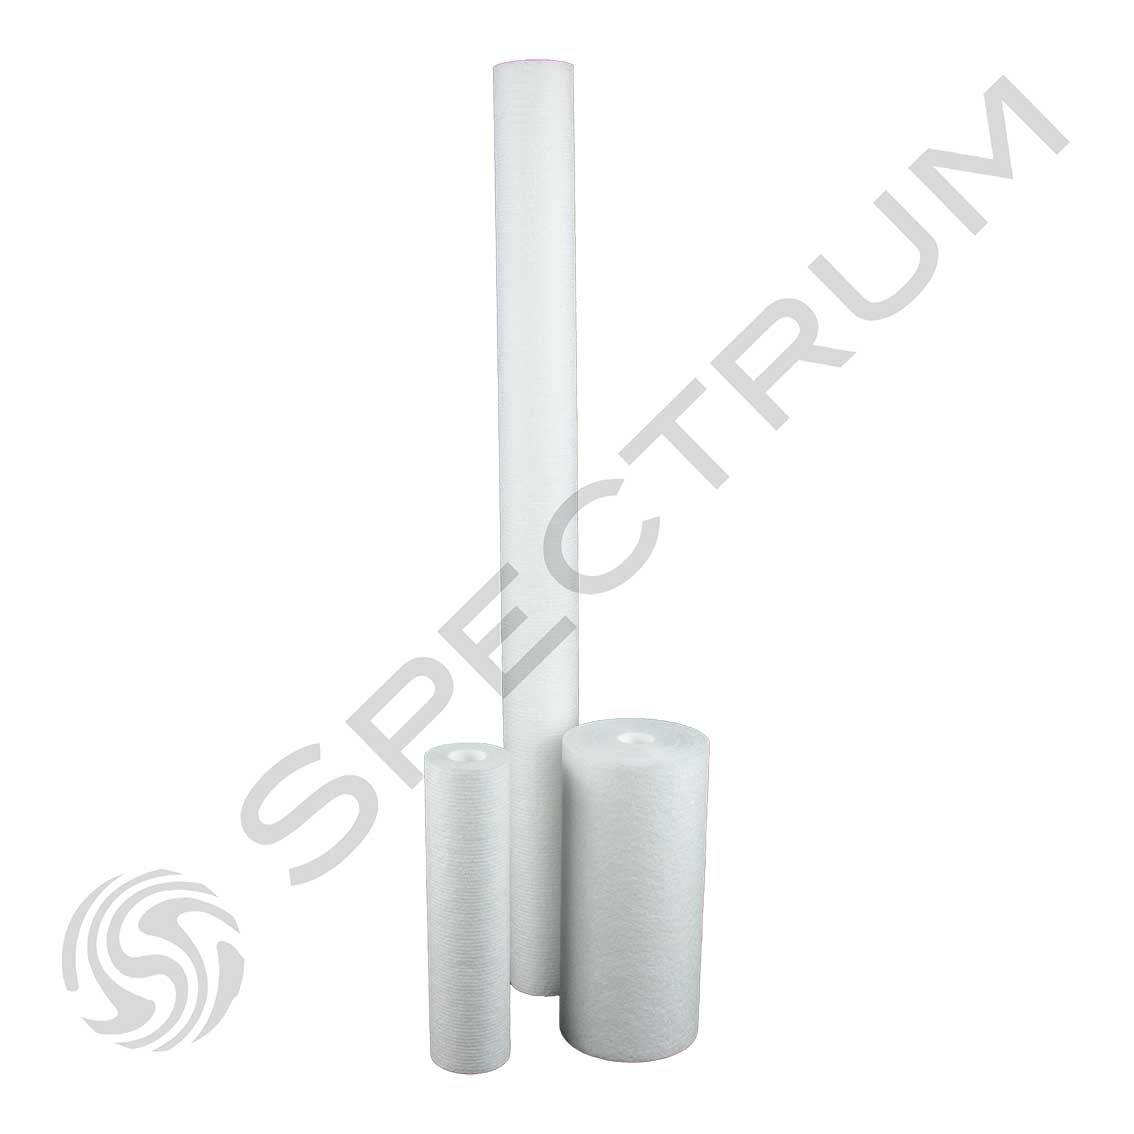 SSP  Standard Spun Bonded TruDepth Filter